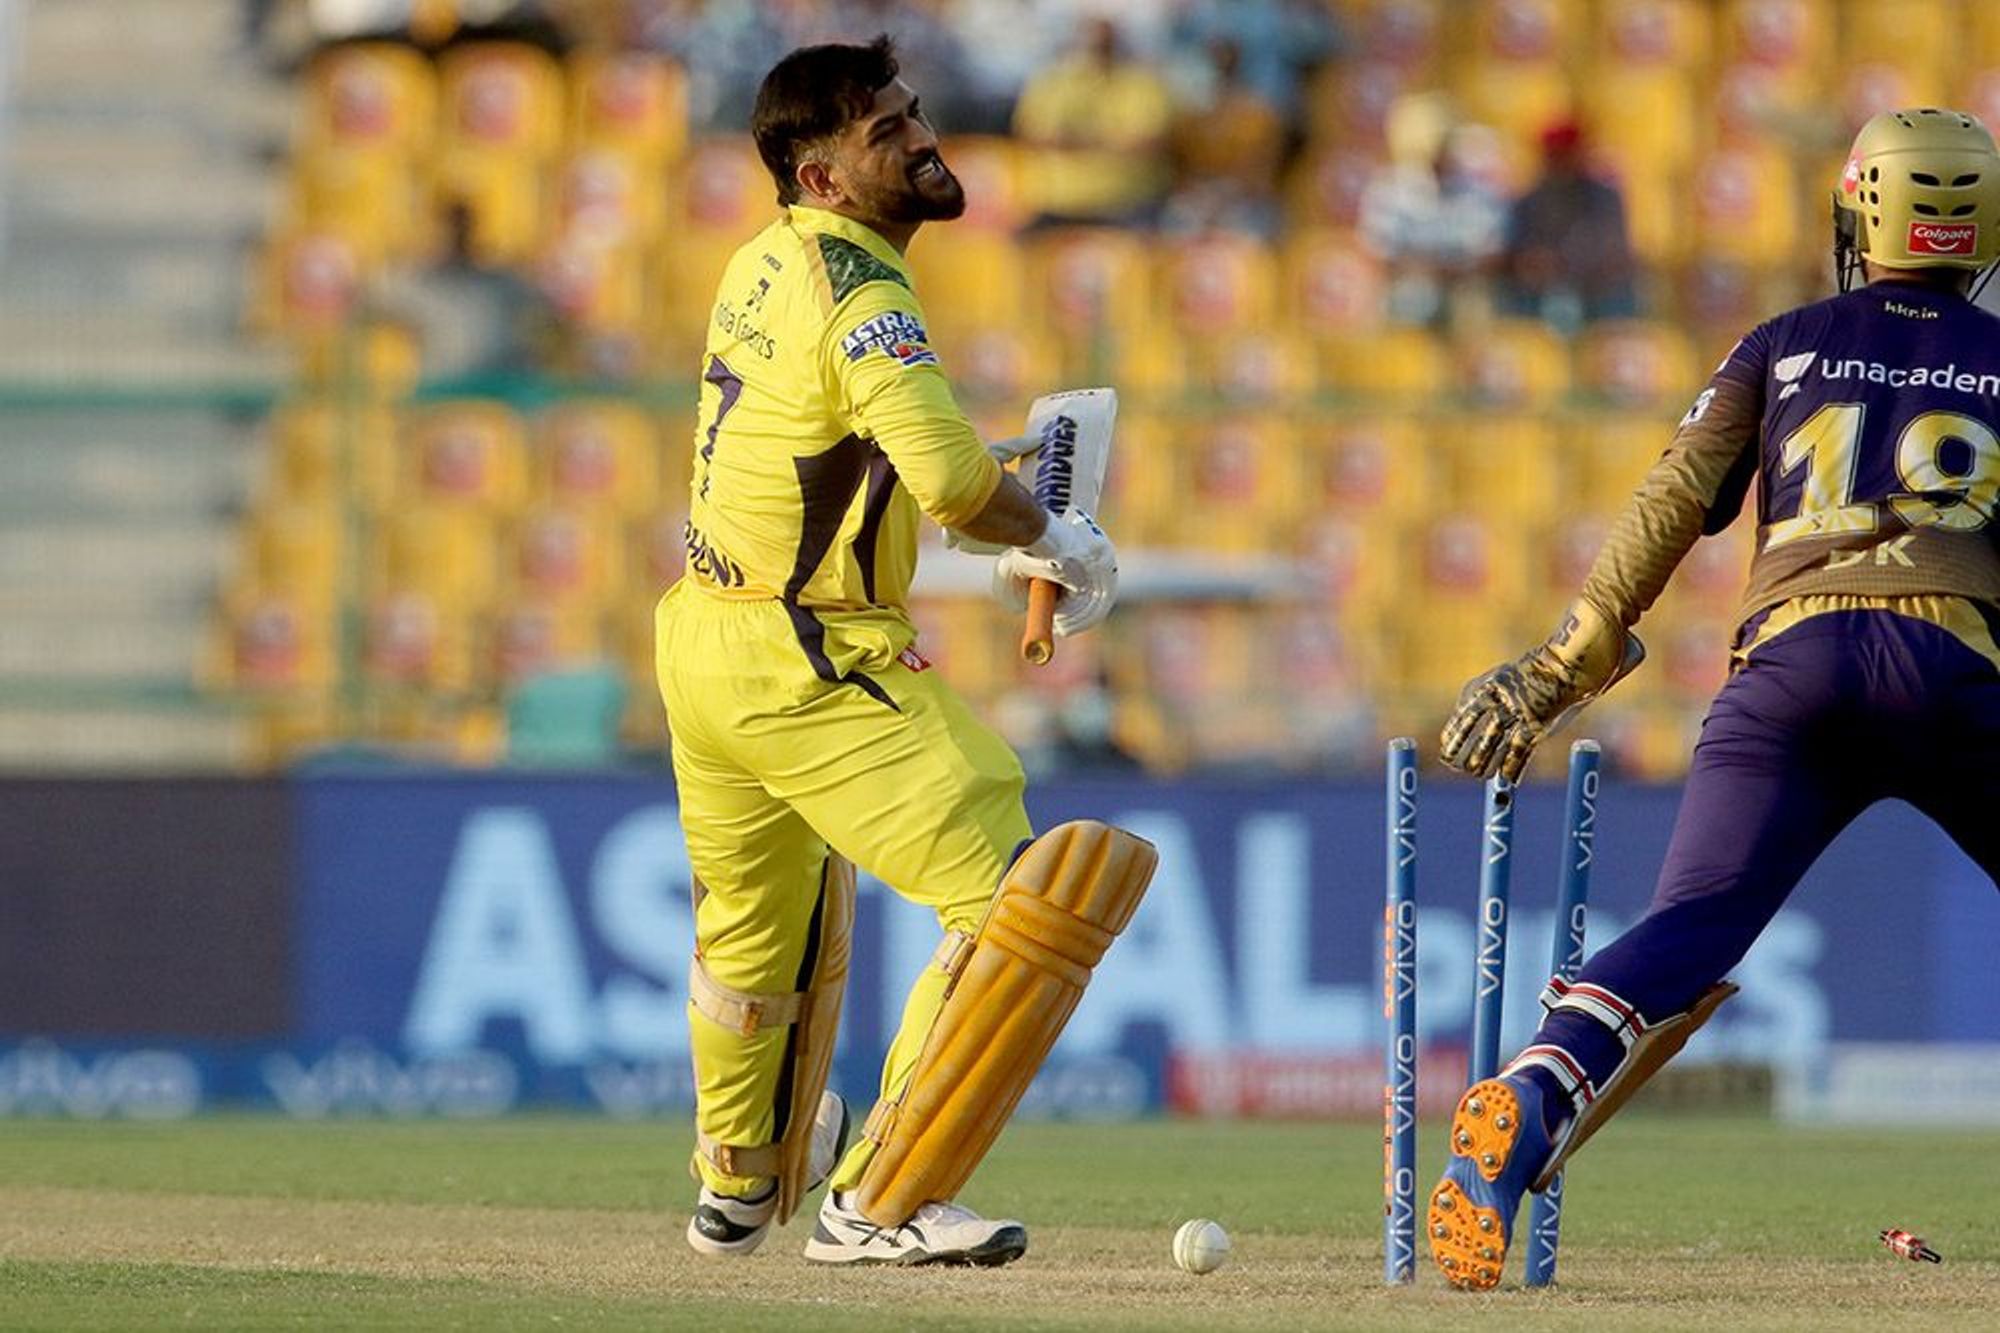 MS Dhoni was clean bowled by Varun Chakravarthy | BCCI/IPL